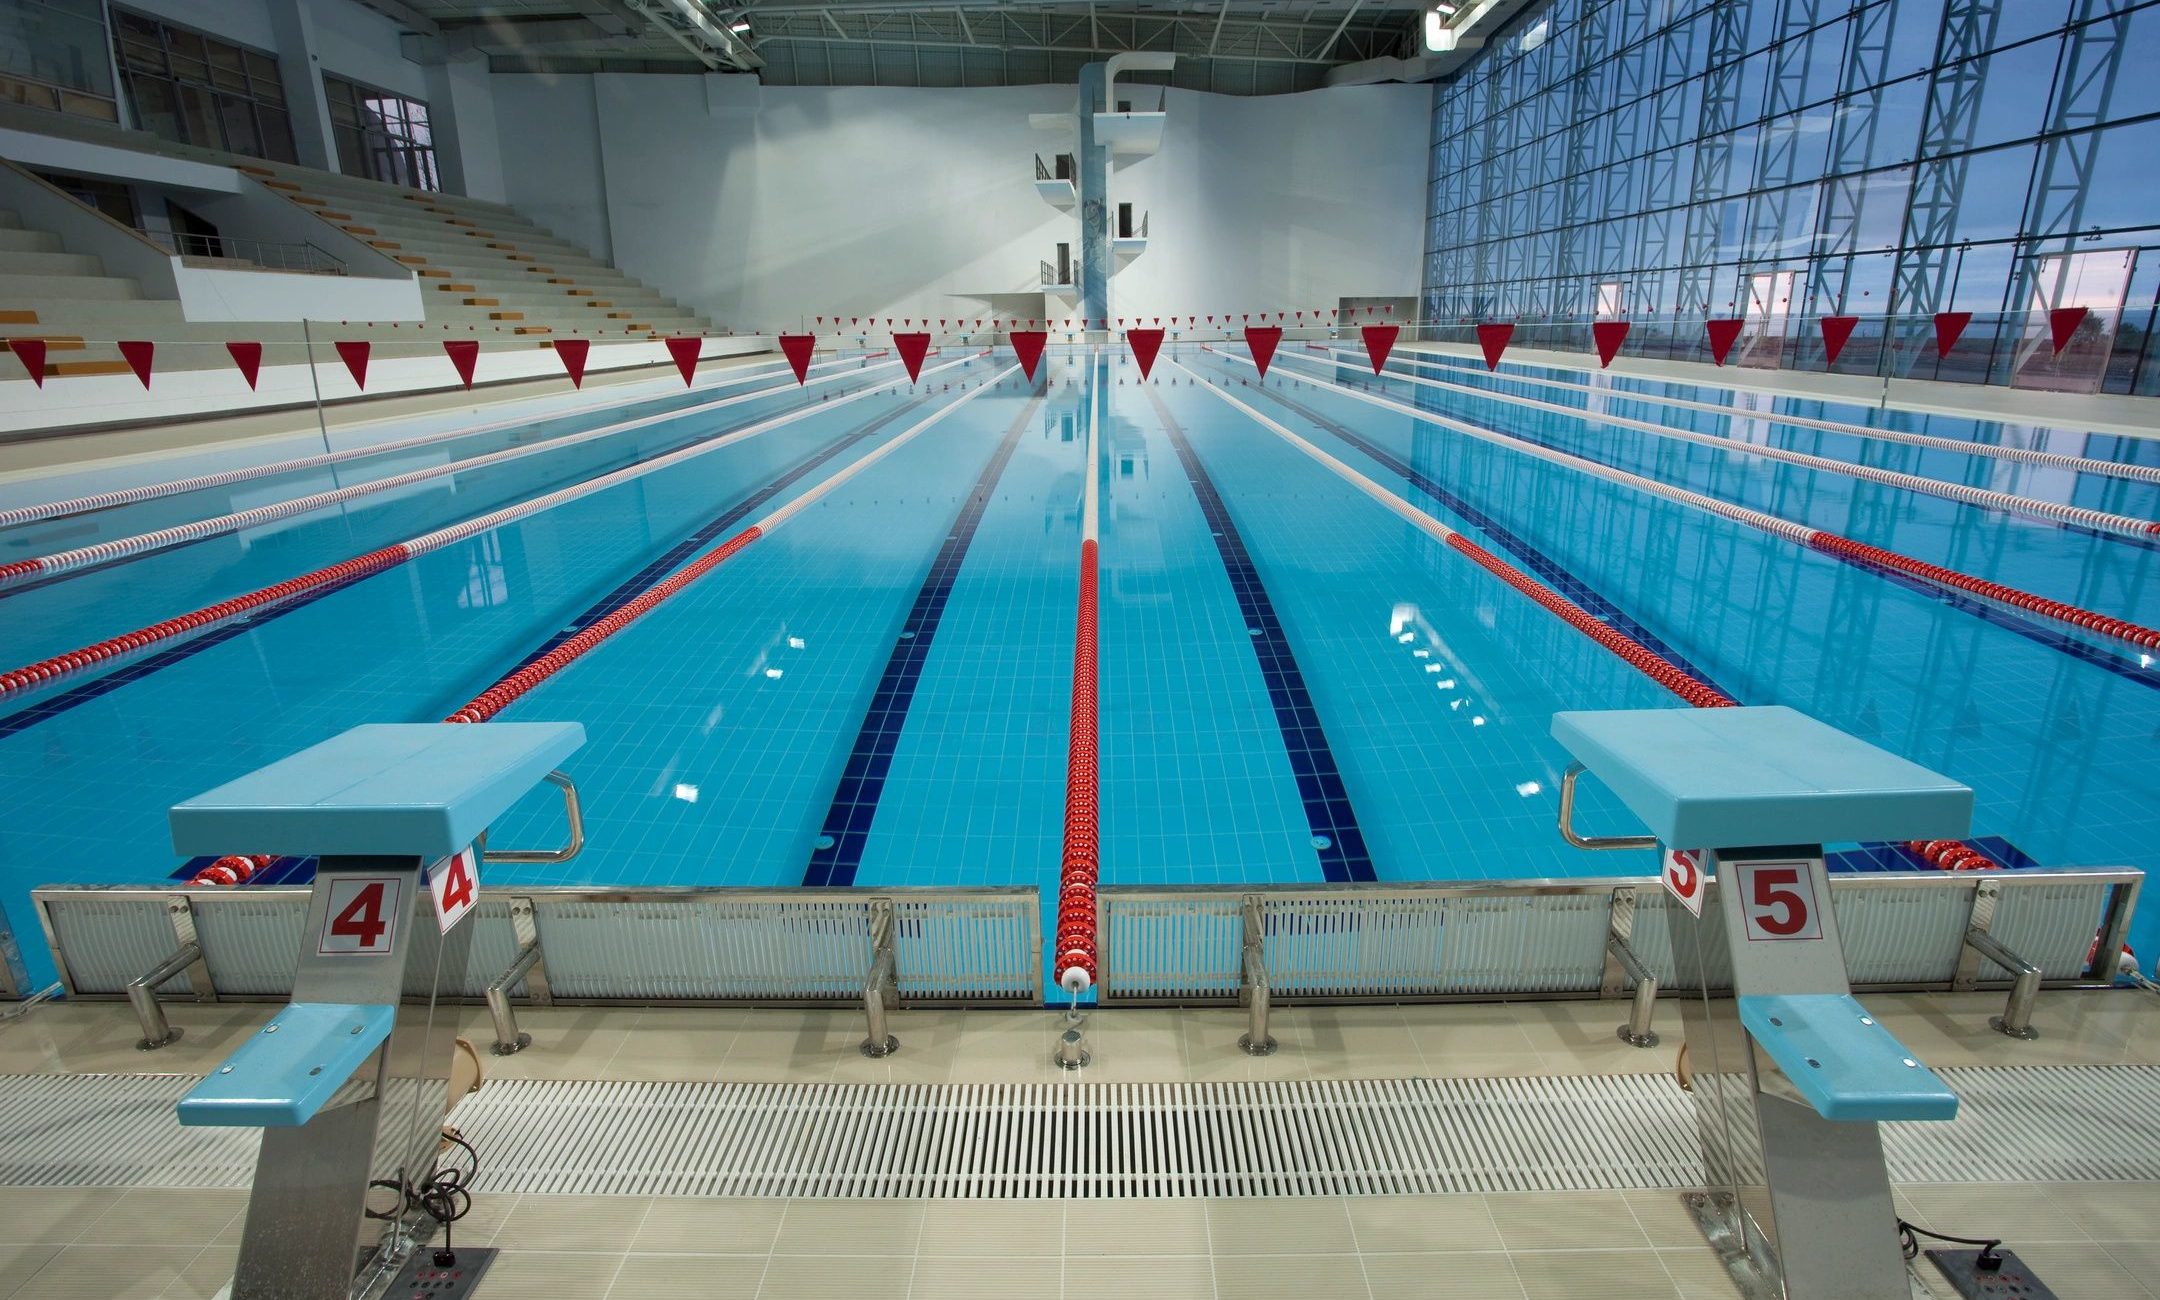 Indoor natatorium with olympic sized pool and large windows